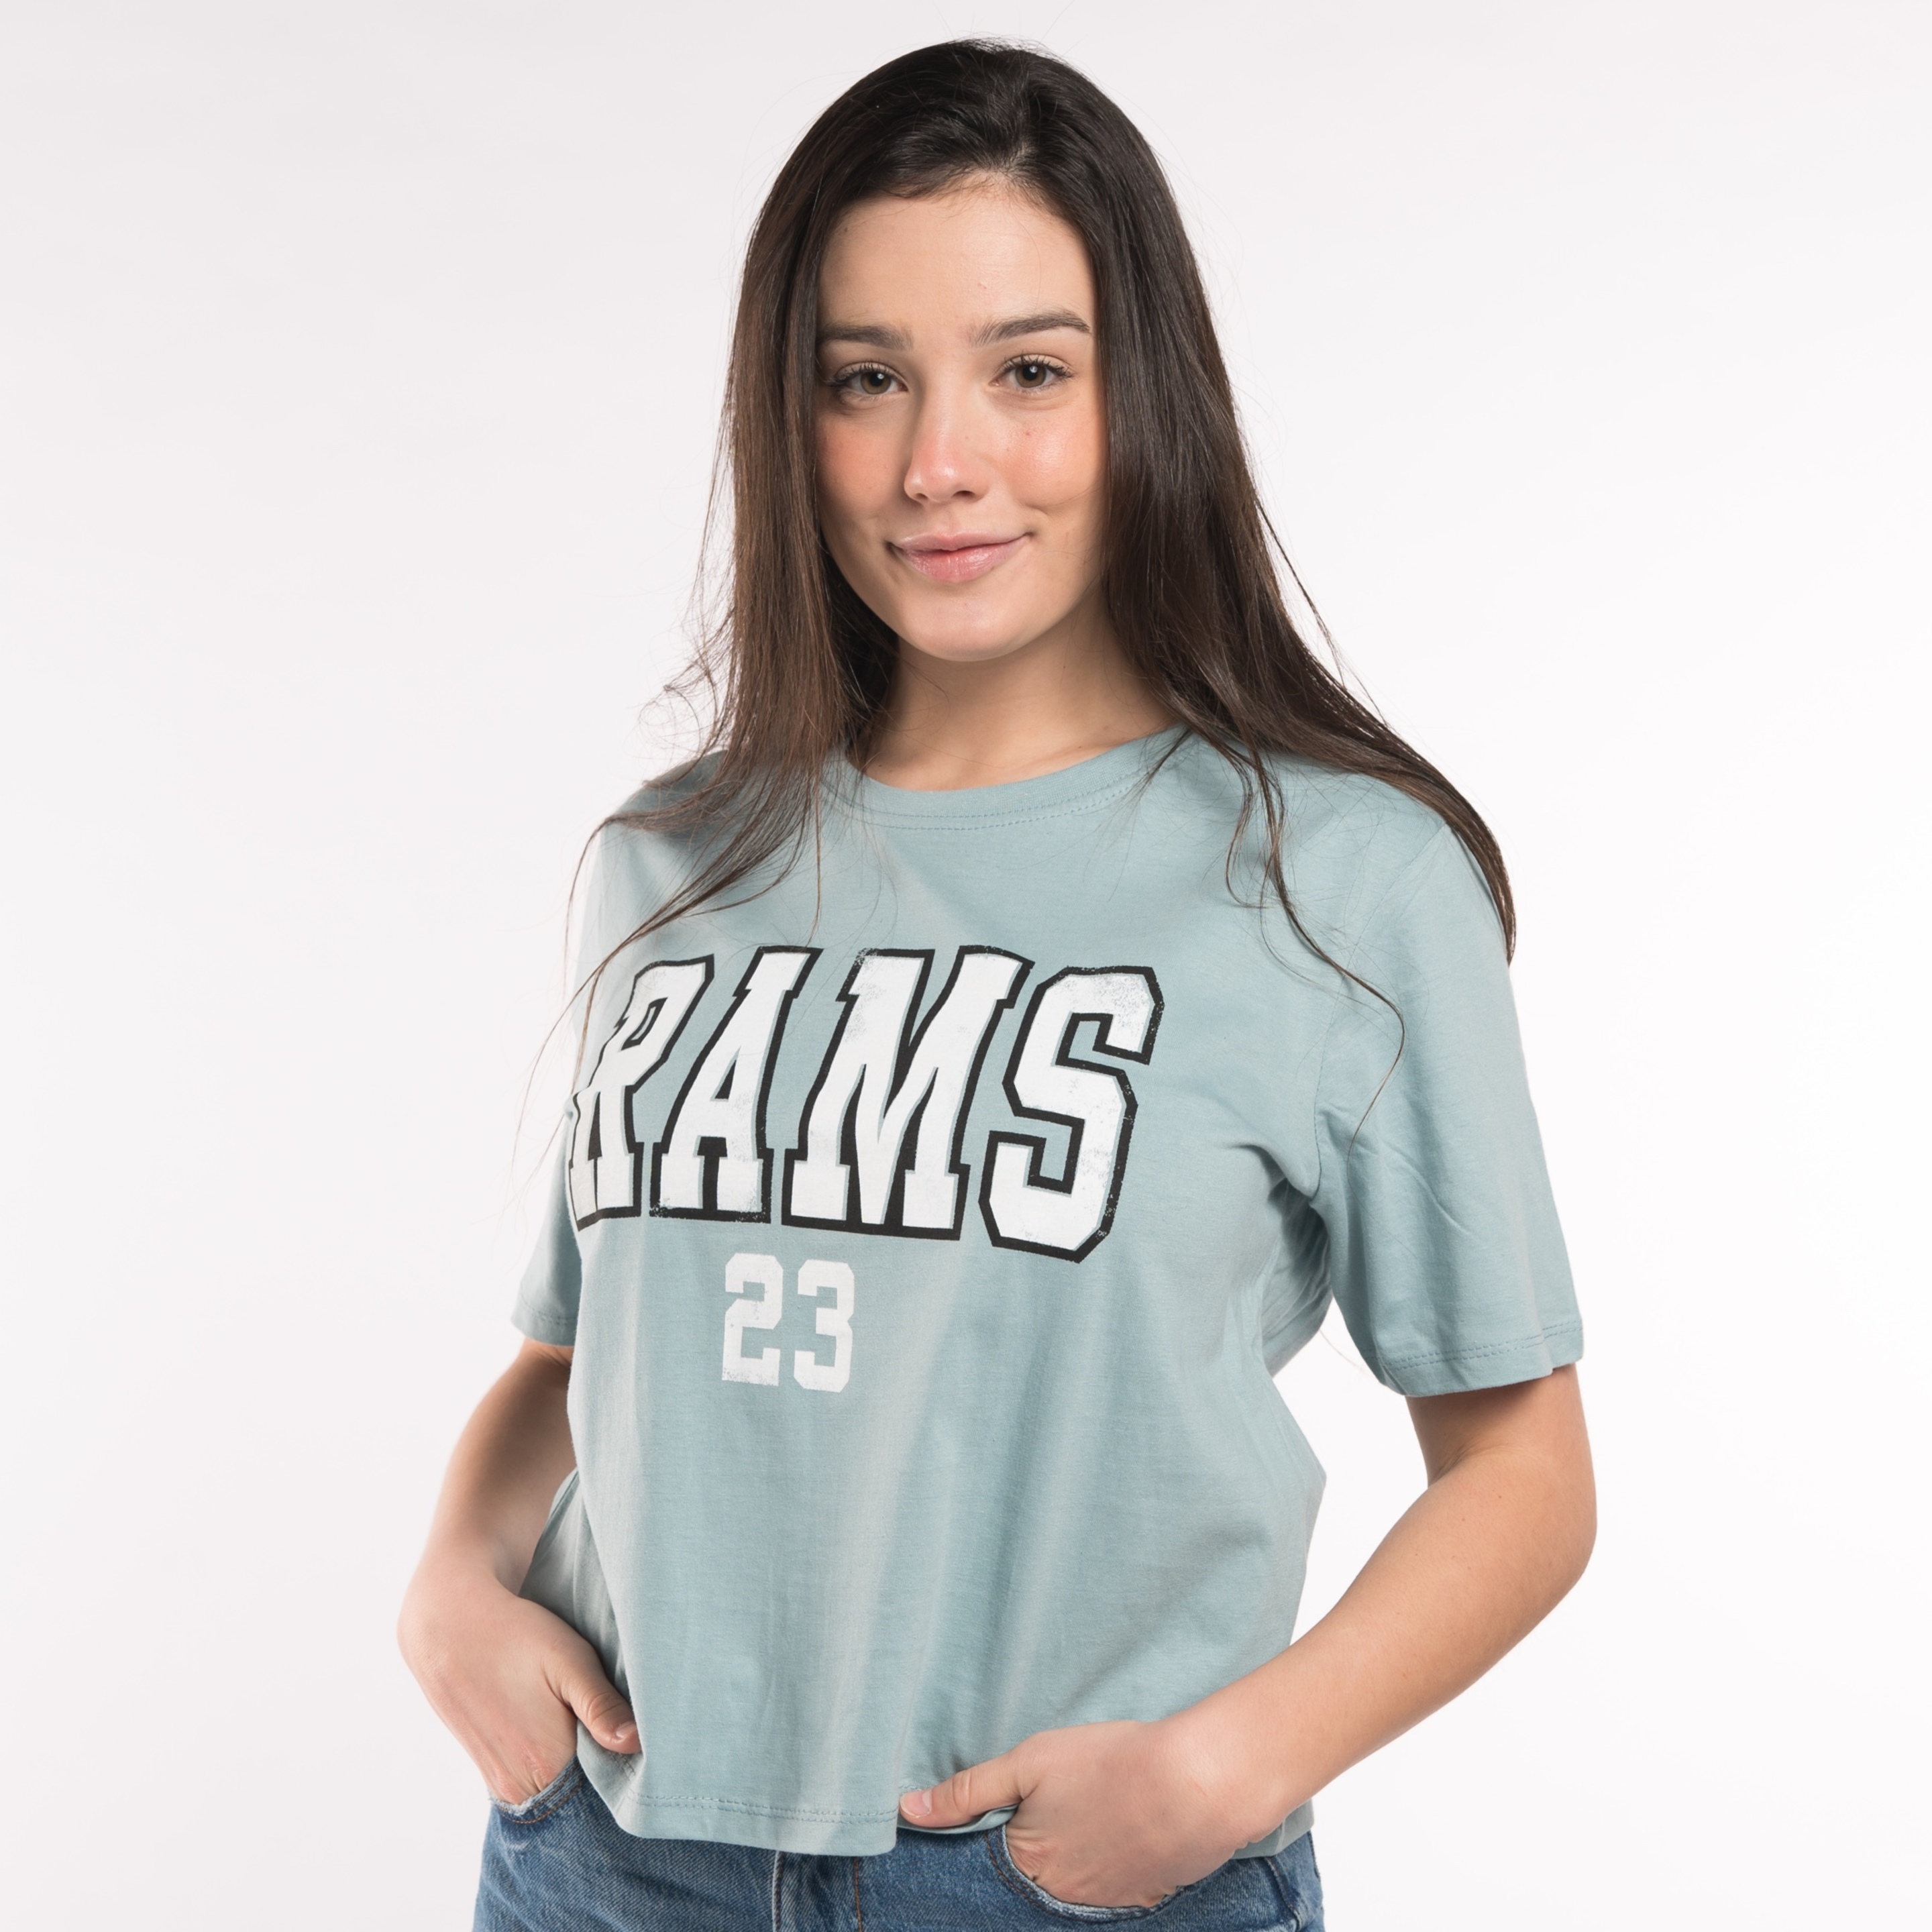 Camiseta Rams 23 Yankee Woman - azul - 